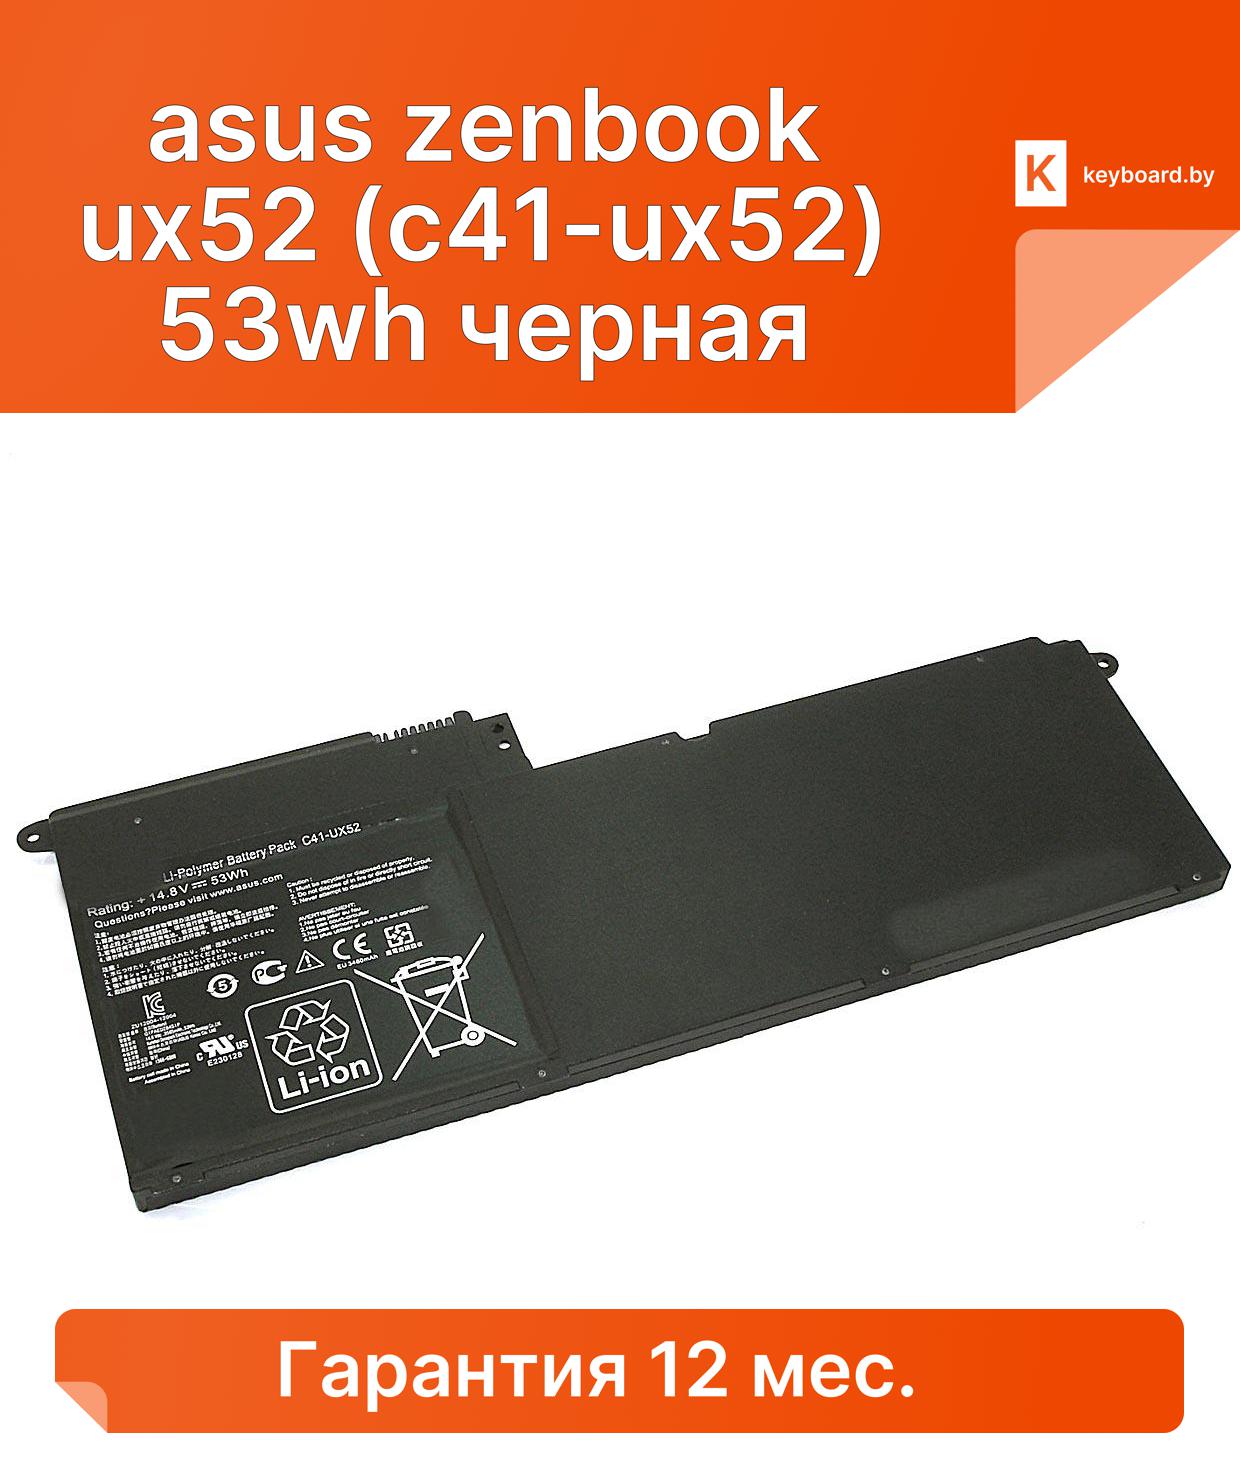 Аккумуляторная батарея для ноутбука asus zenbook ux52 (c41-ux52) 53wh черная